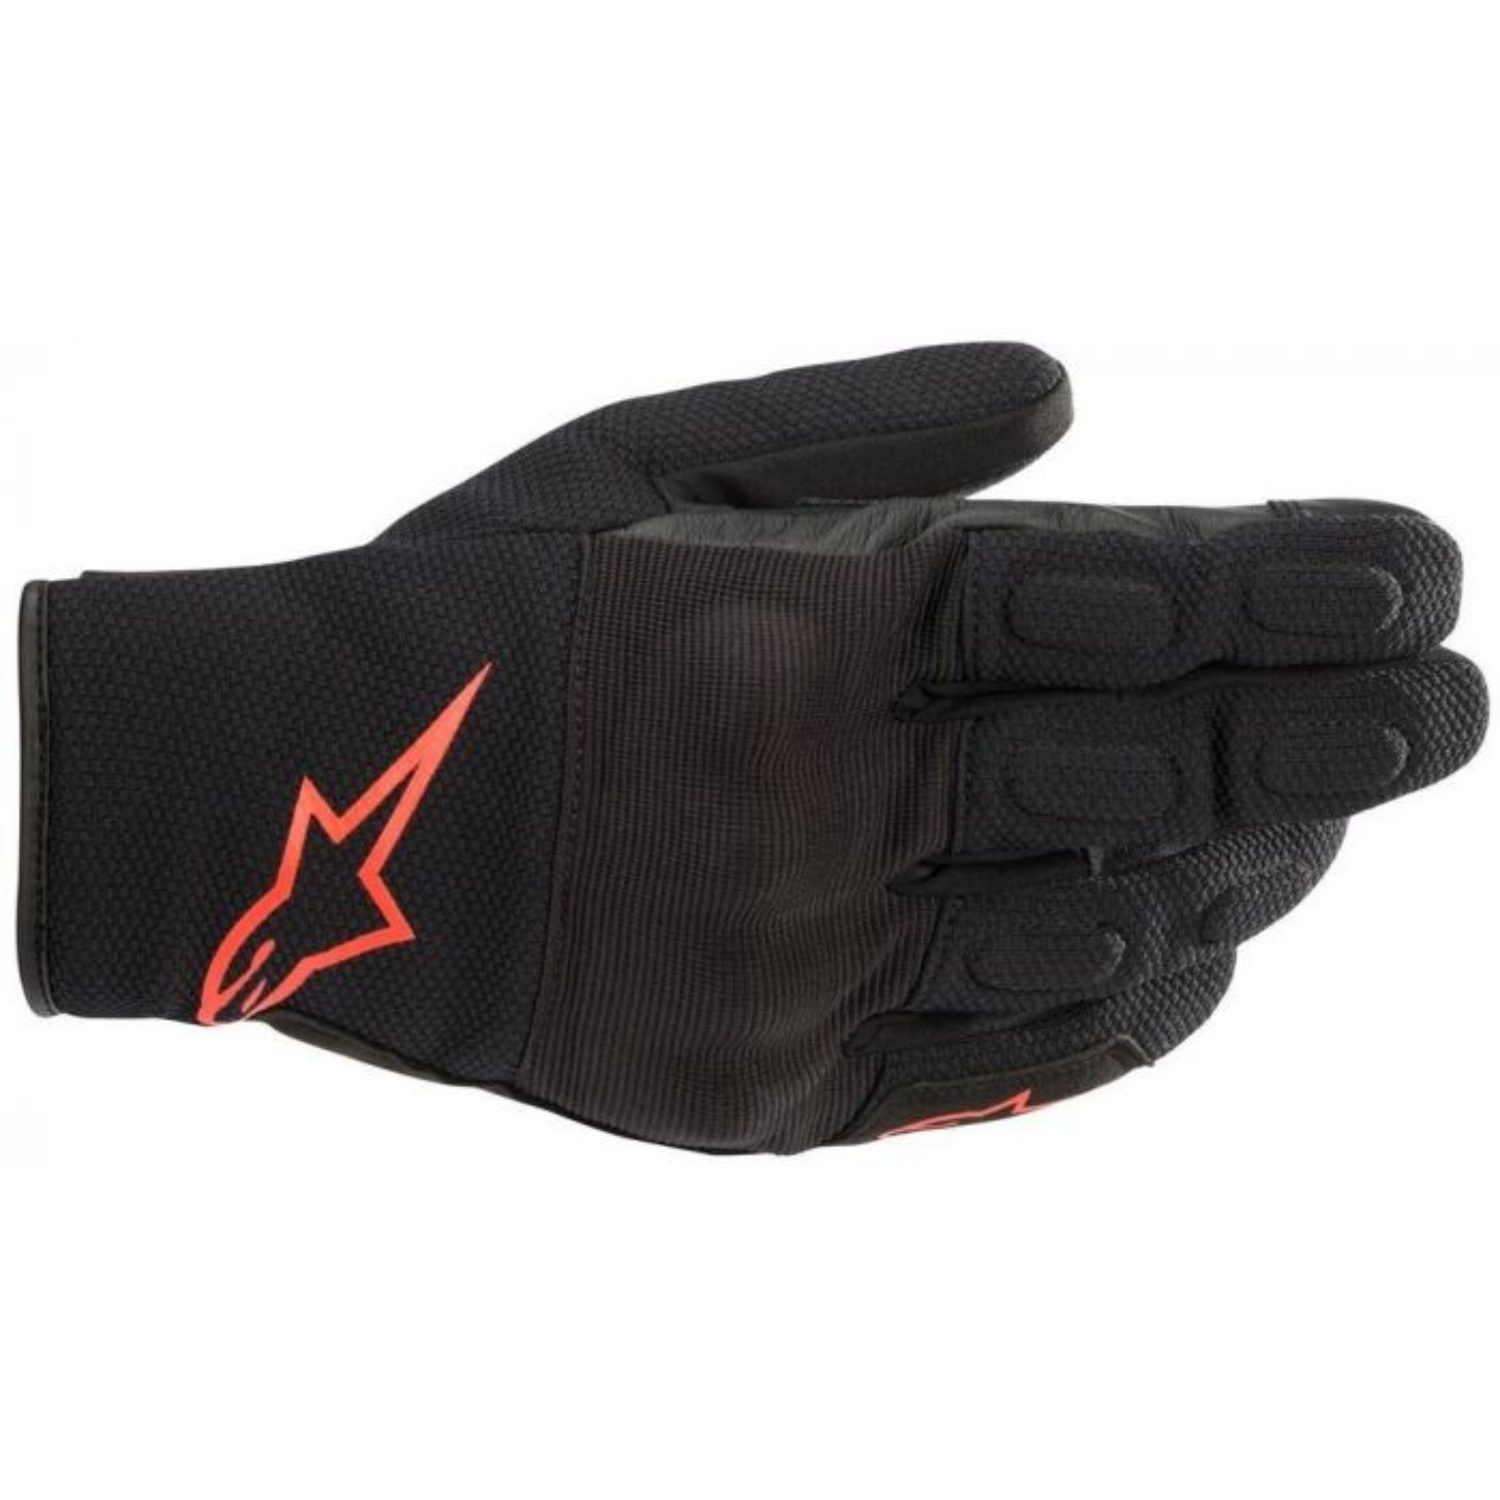 Image of Alpinestars S Max Drystar Gloves Black Red Fluo Taille M